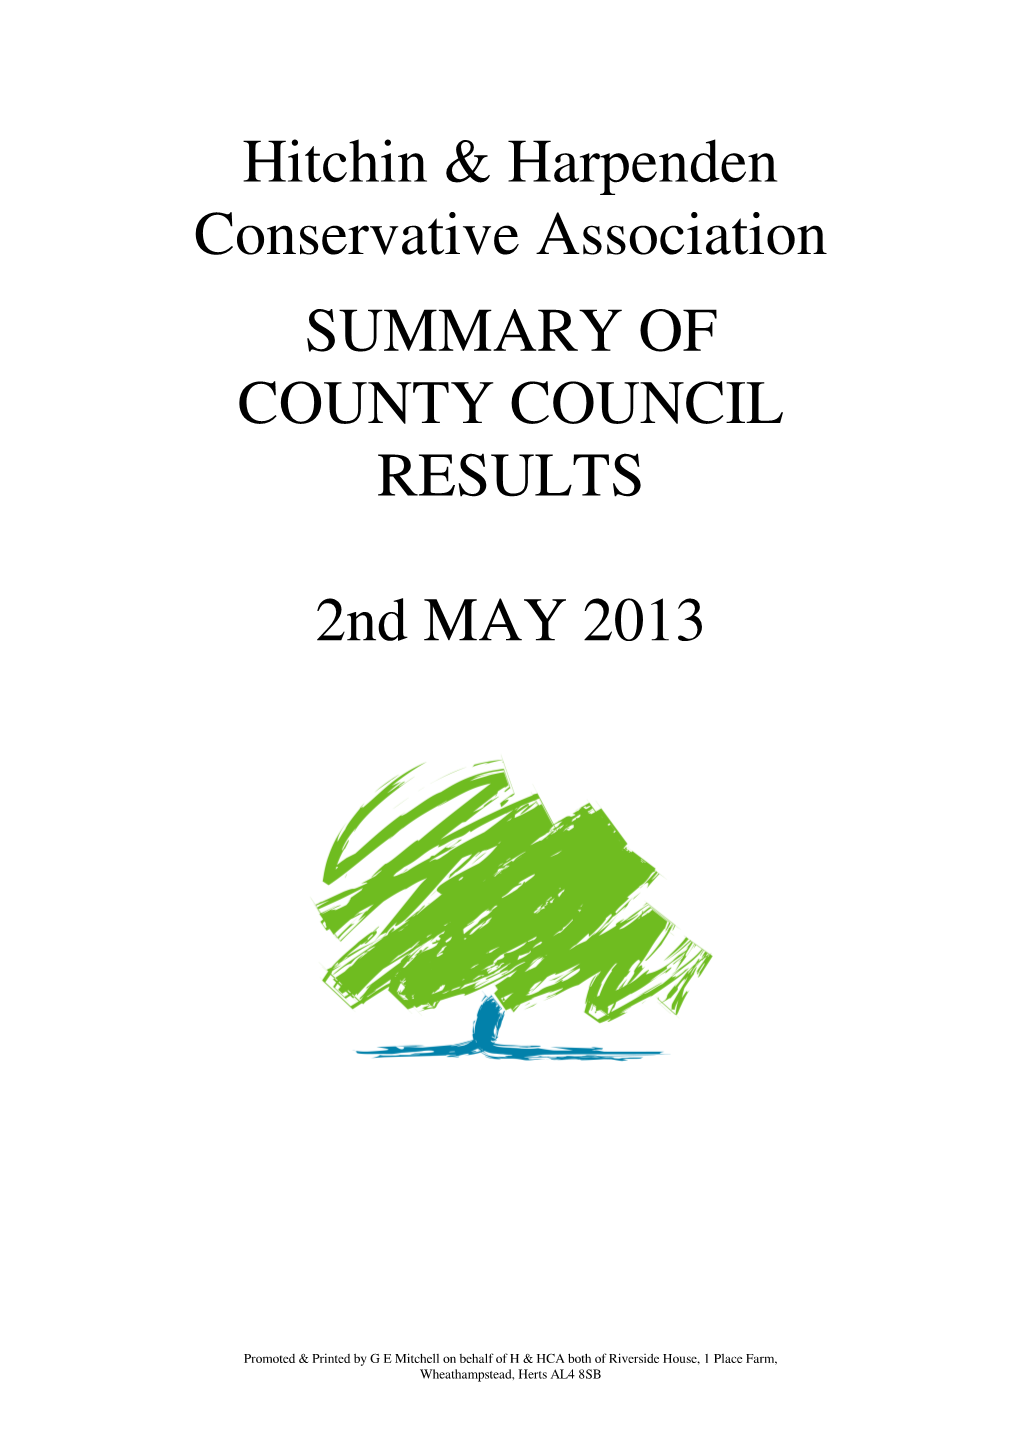 Hitchin & Harpenden Conservative Association SUMMARY OF